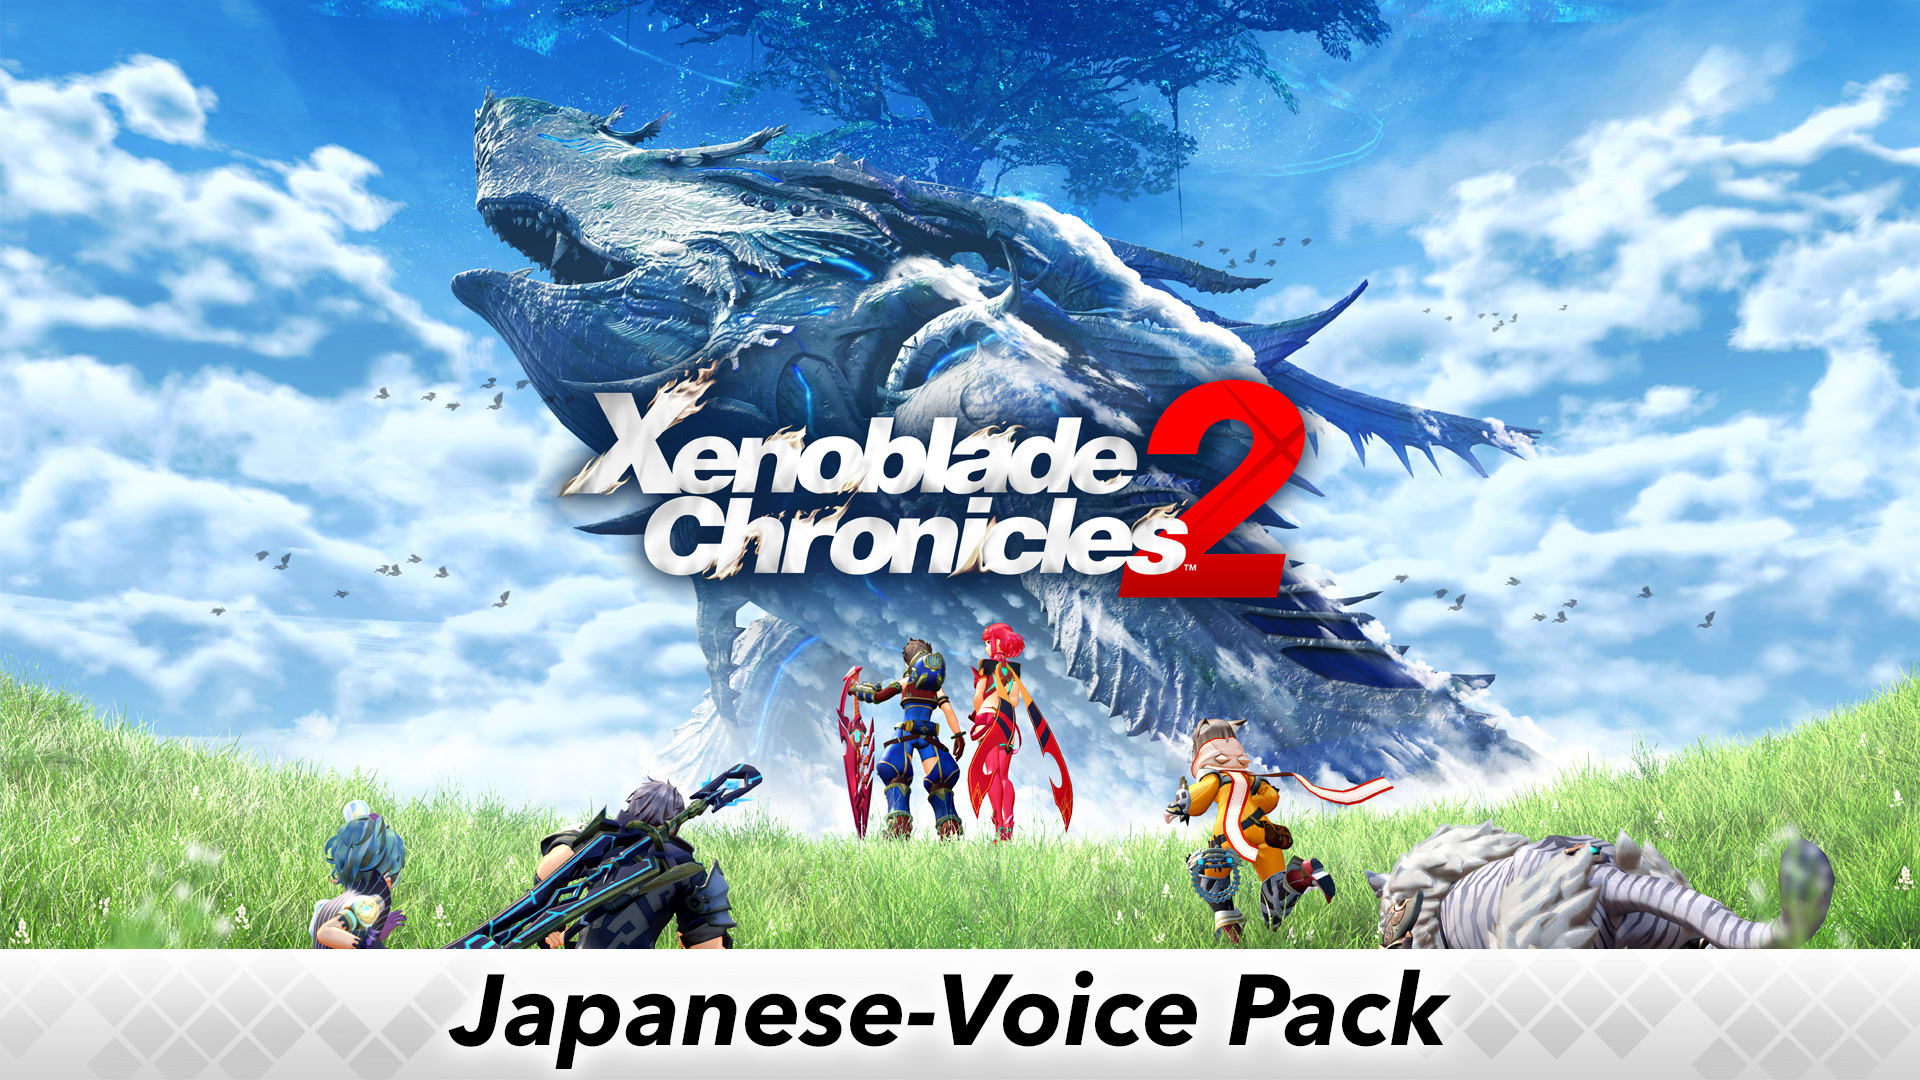 Japanese-Voice Pack